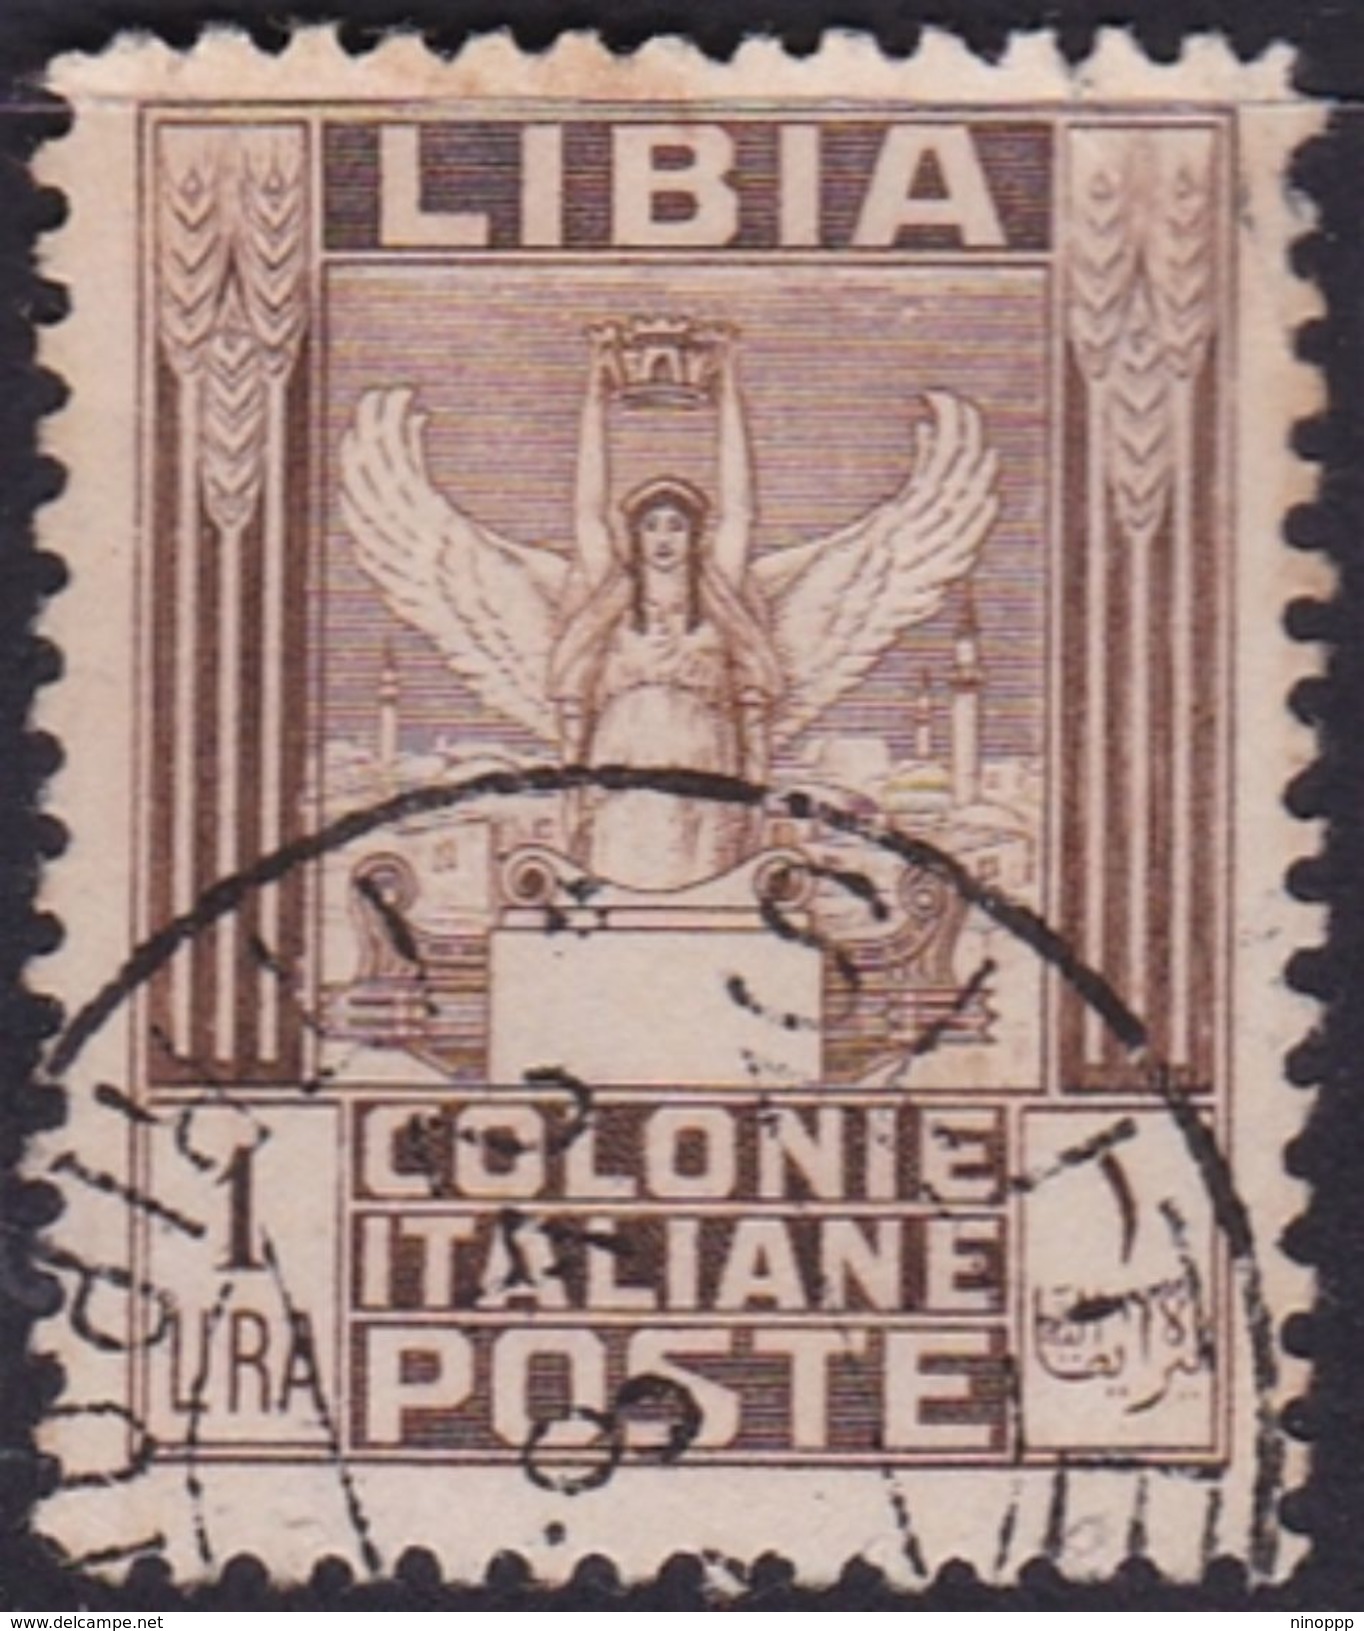 Italy-Colonies And Territories-Libya S 65 1926-30 ,Victory,perf 11,1 Lira Brown,used - Libya